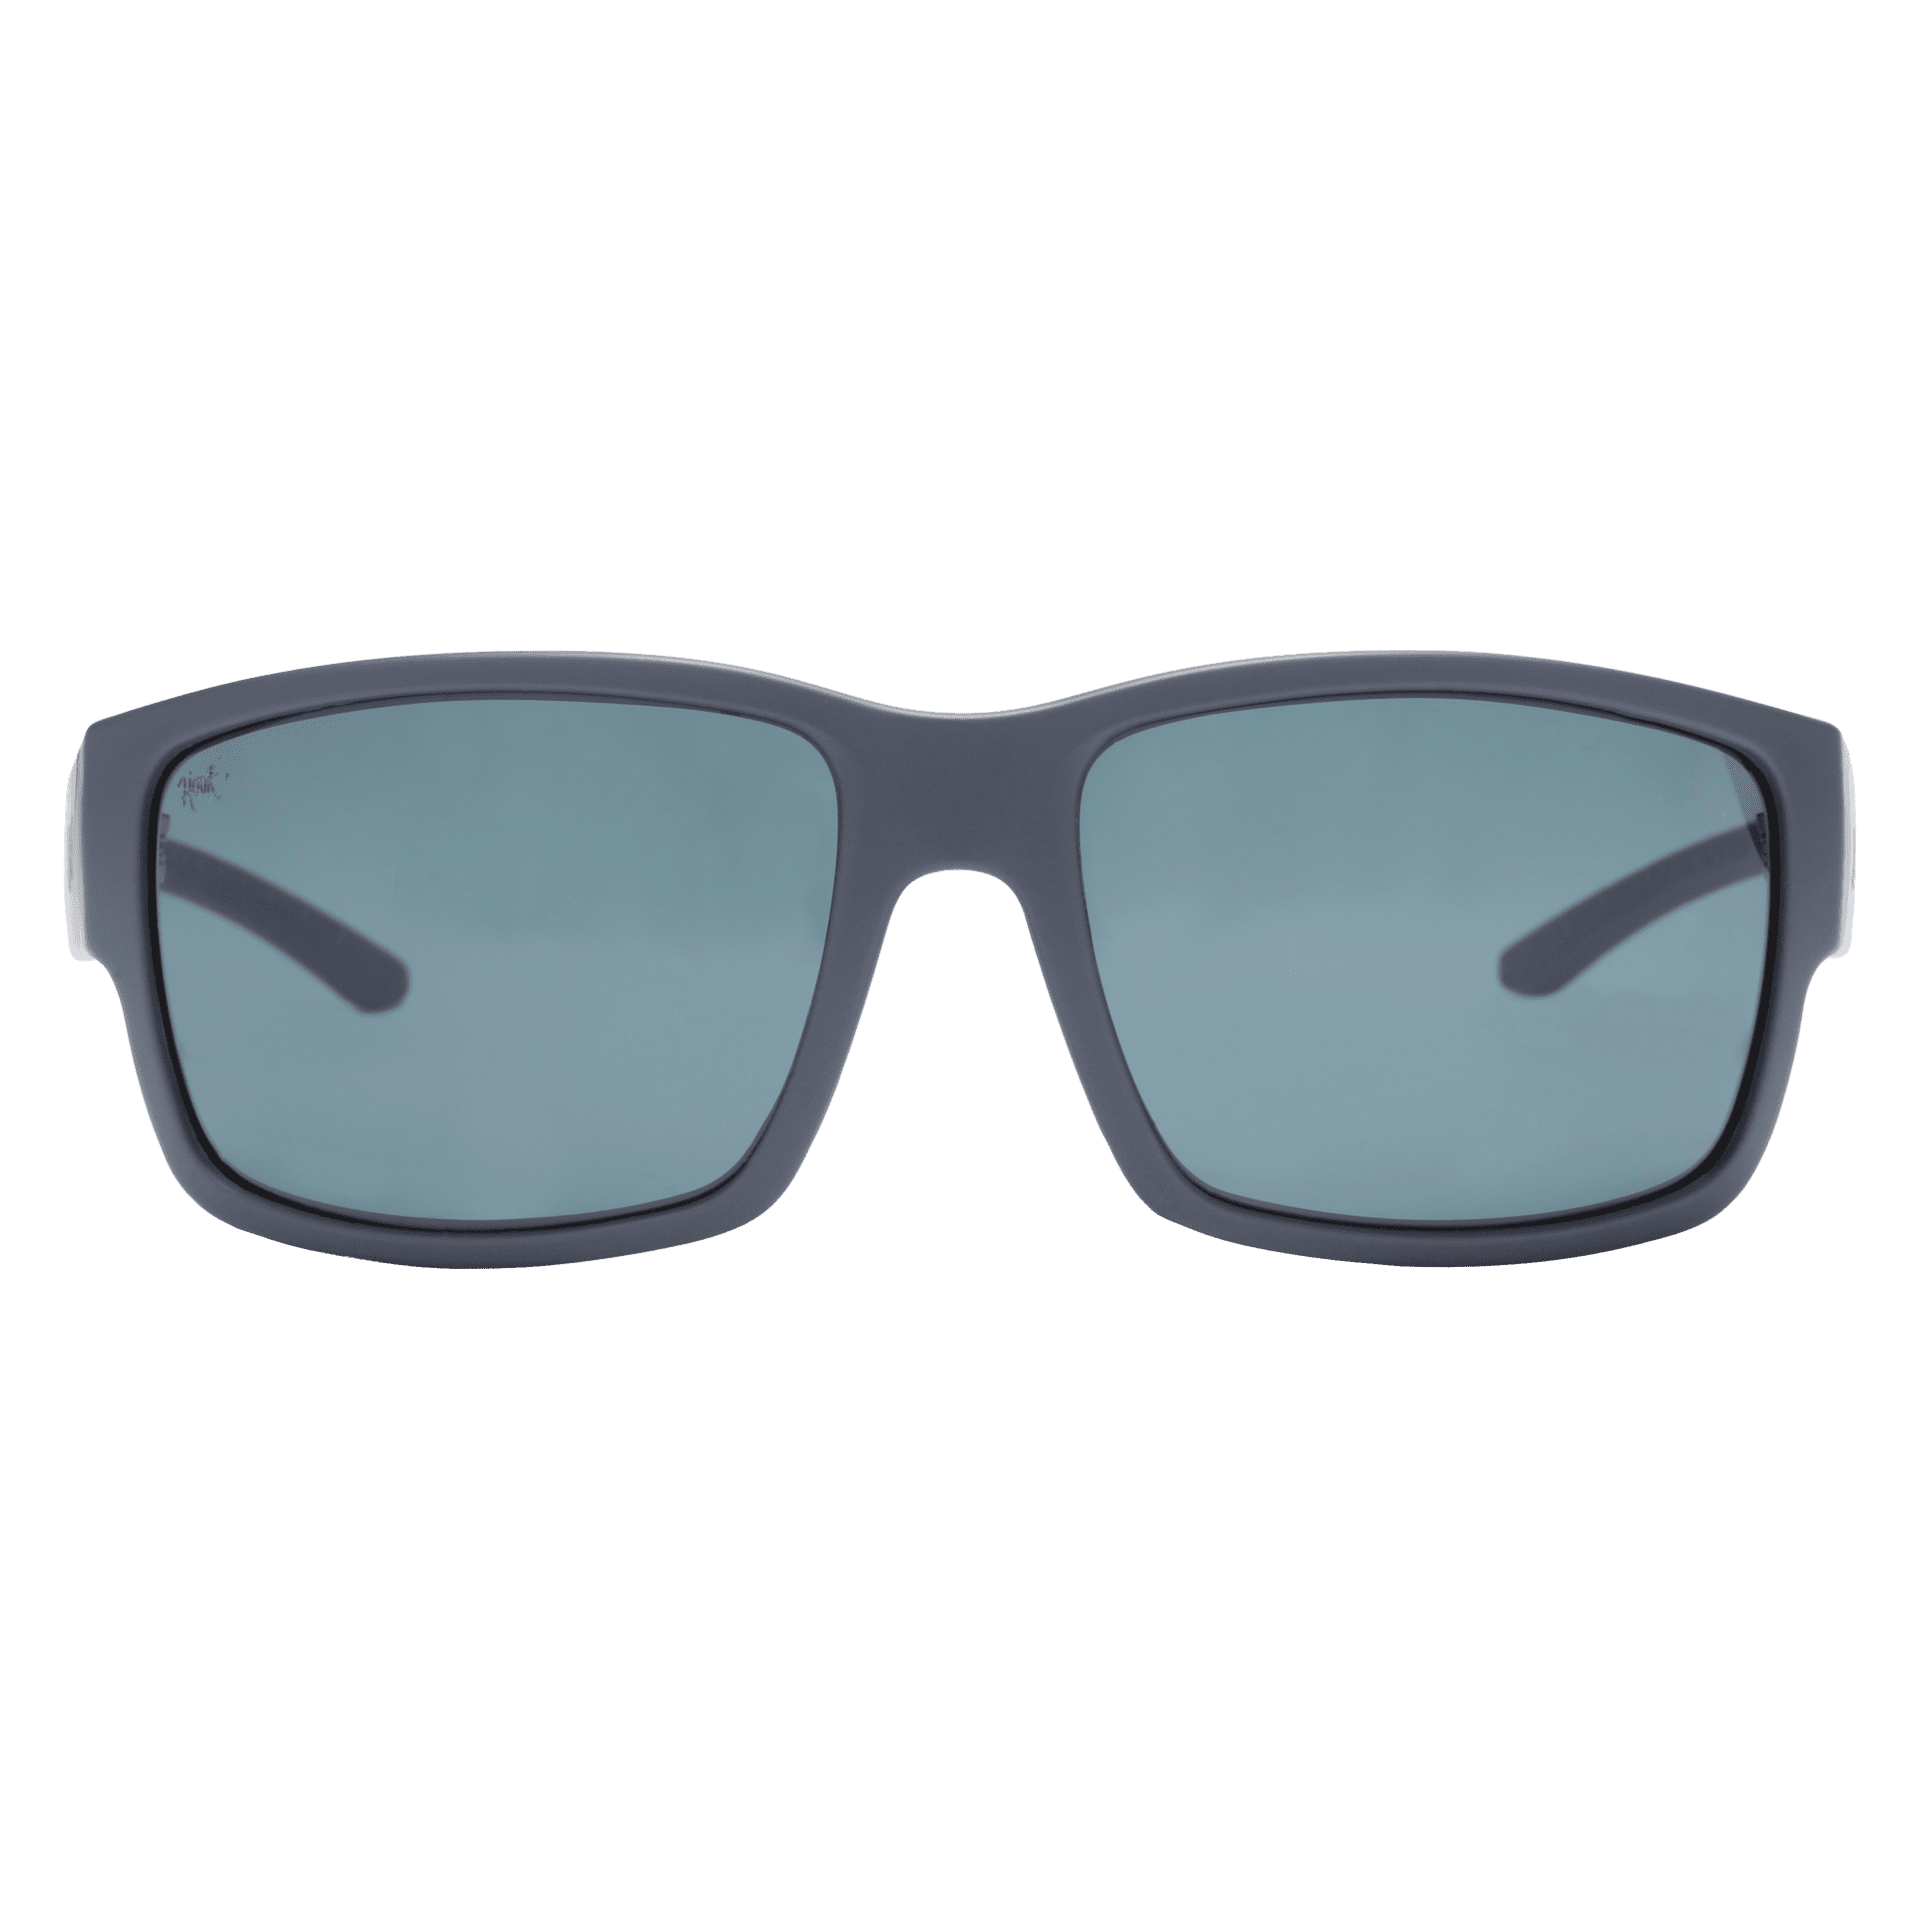 BIG EYE - Hook Sunglasses